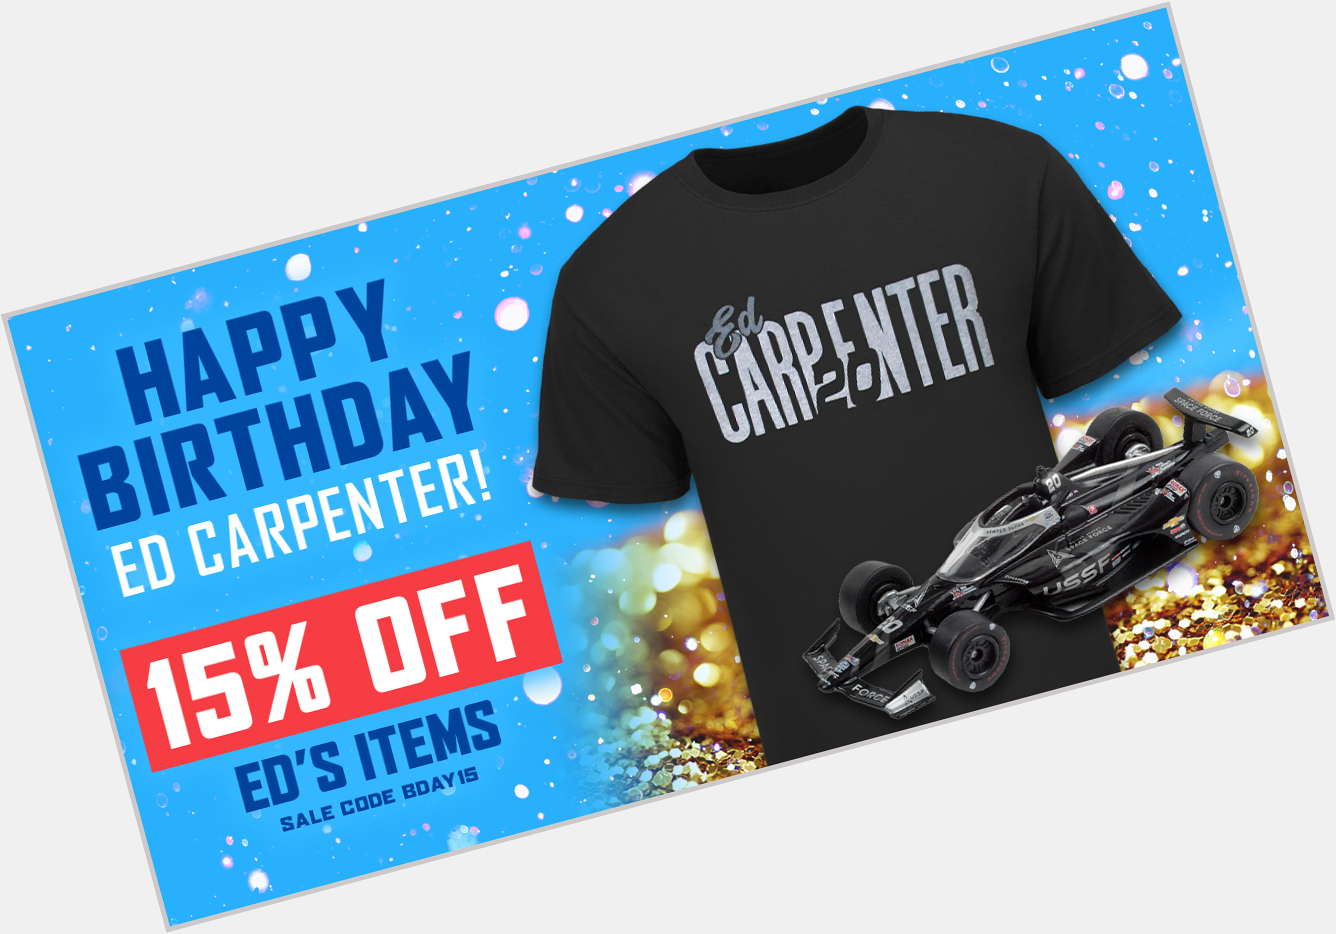 Happy Birthday Ed Carpenter!!   Take 15% off Ed\s items till Friday!:  